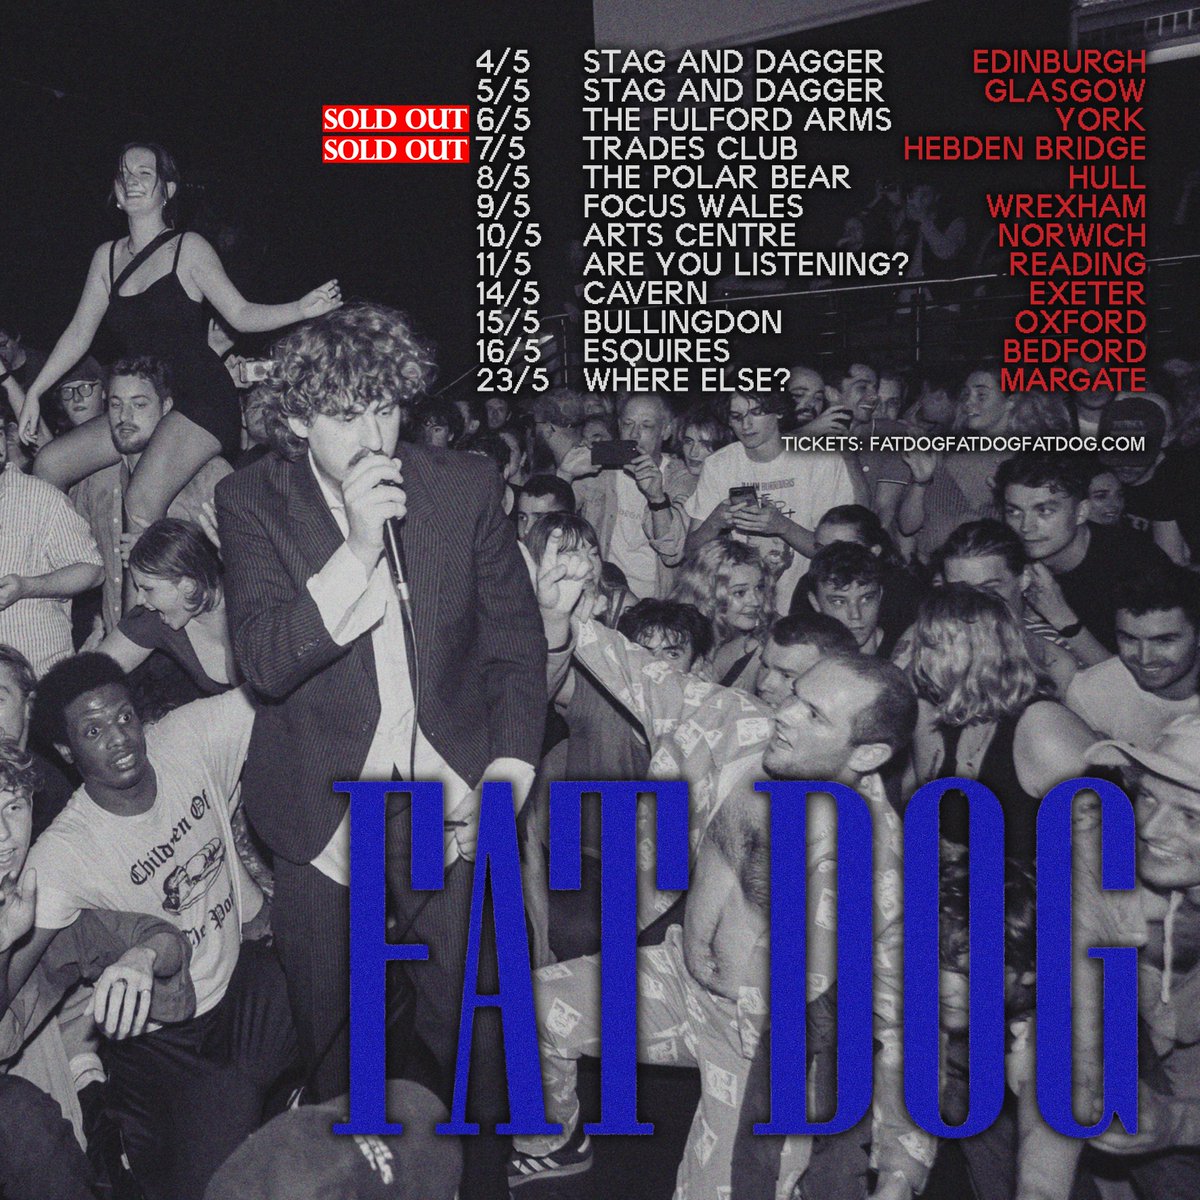 DOG BLESS YOU ALL YORK & HEBDEN BRIDGE SOLD OUT UK TOUR STARTS SATURDAY WOOF! fatdogfatdogfatdog.com/#tour